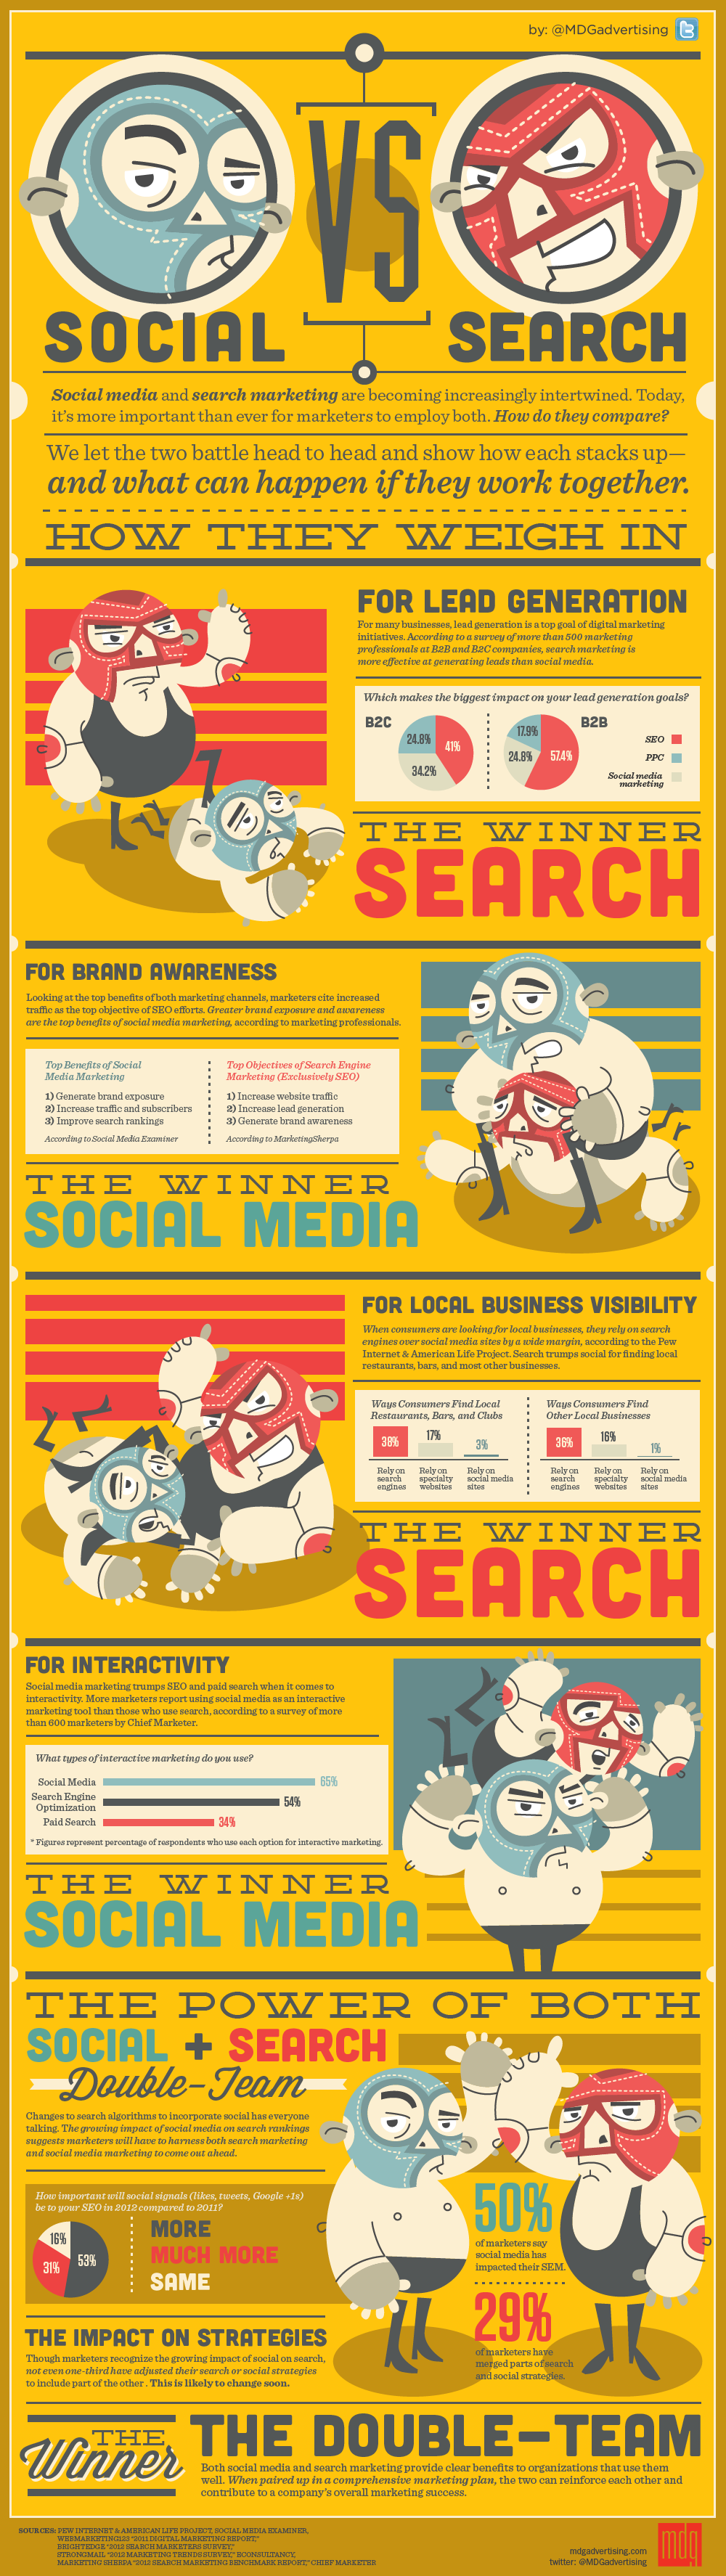 Social Media vs Search Marketing: A golpe limpio